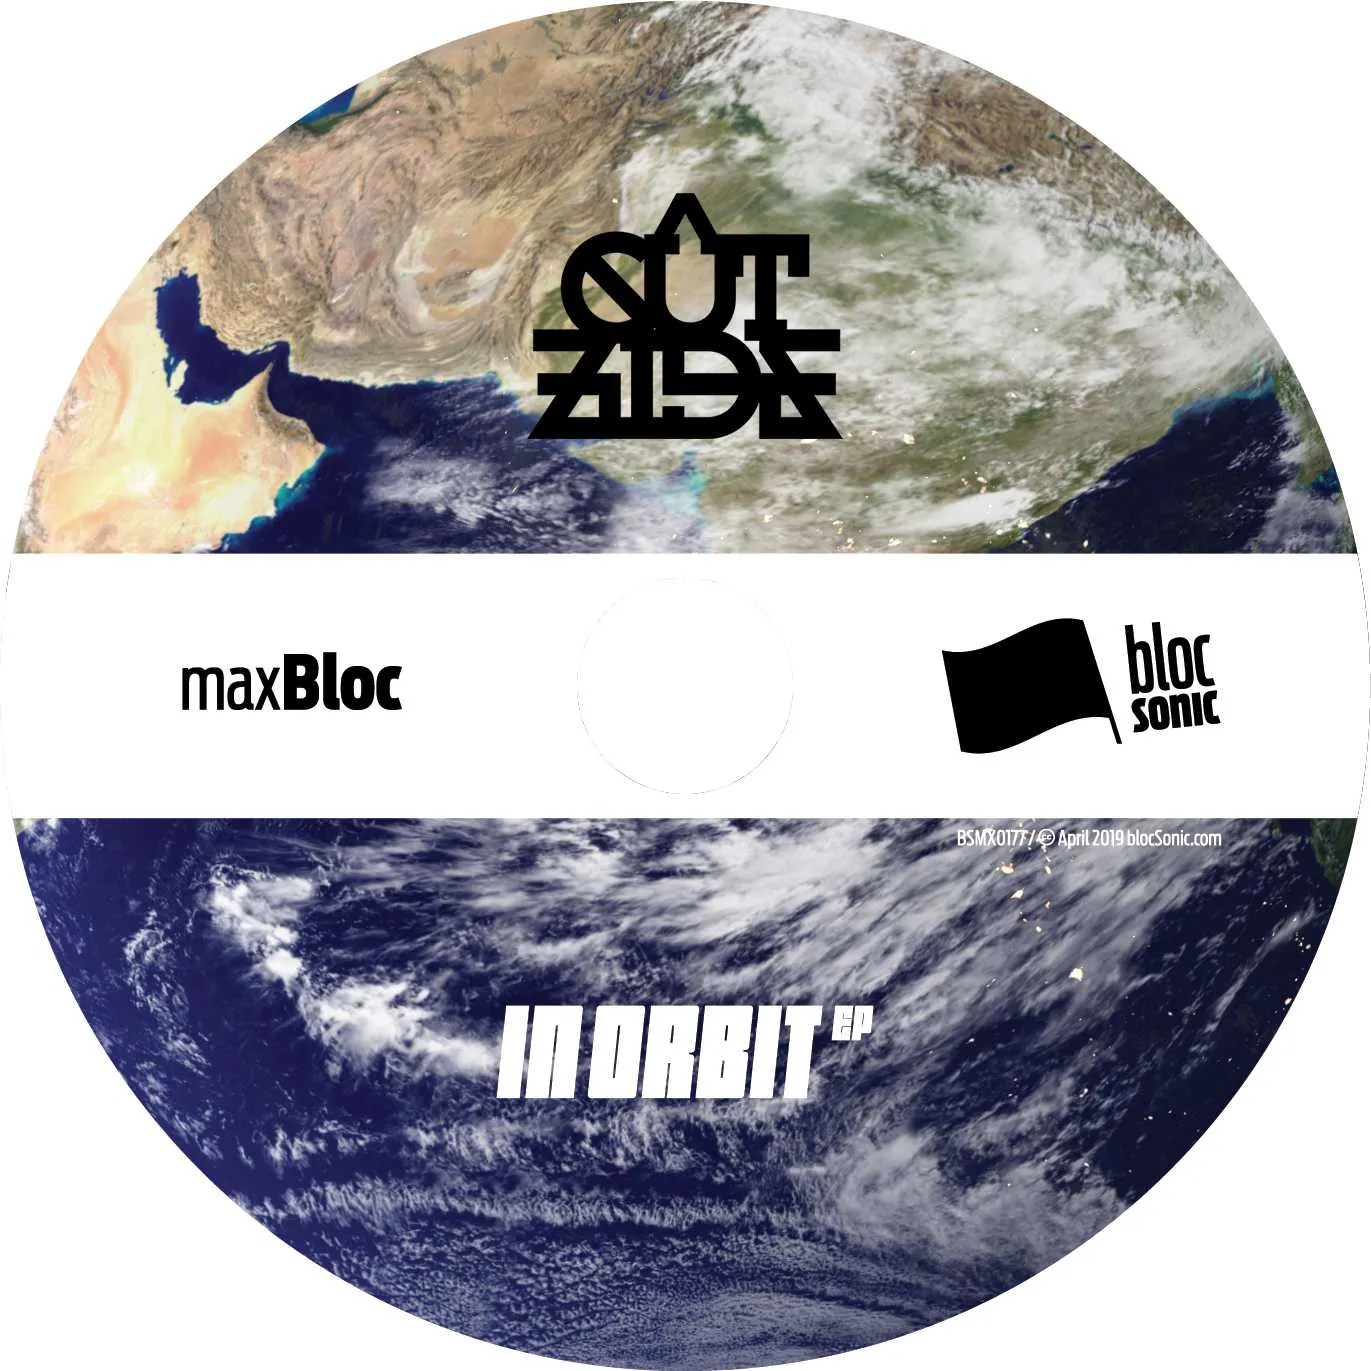 Album disc for “In Orbit EP” by Cutside